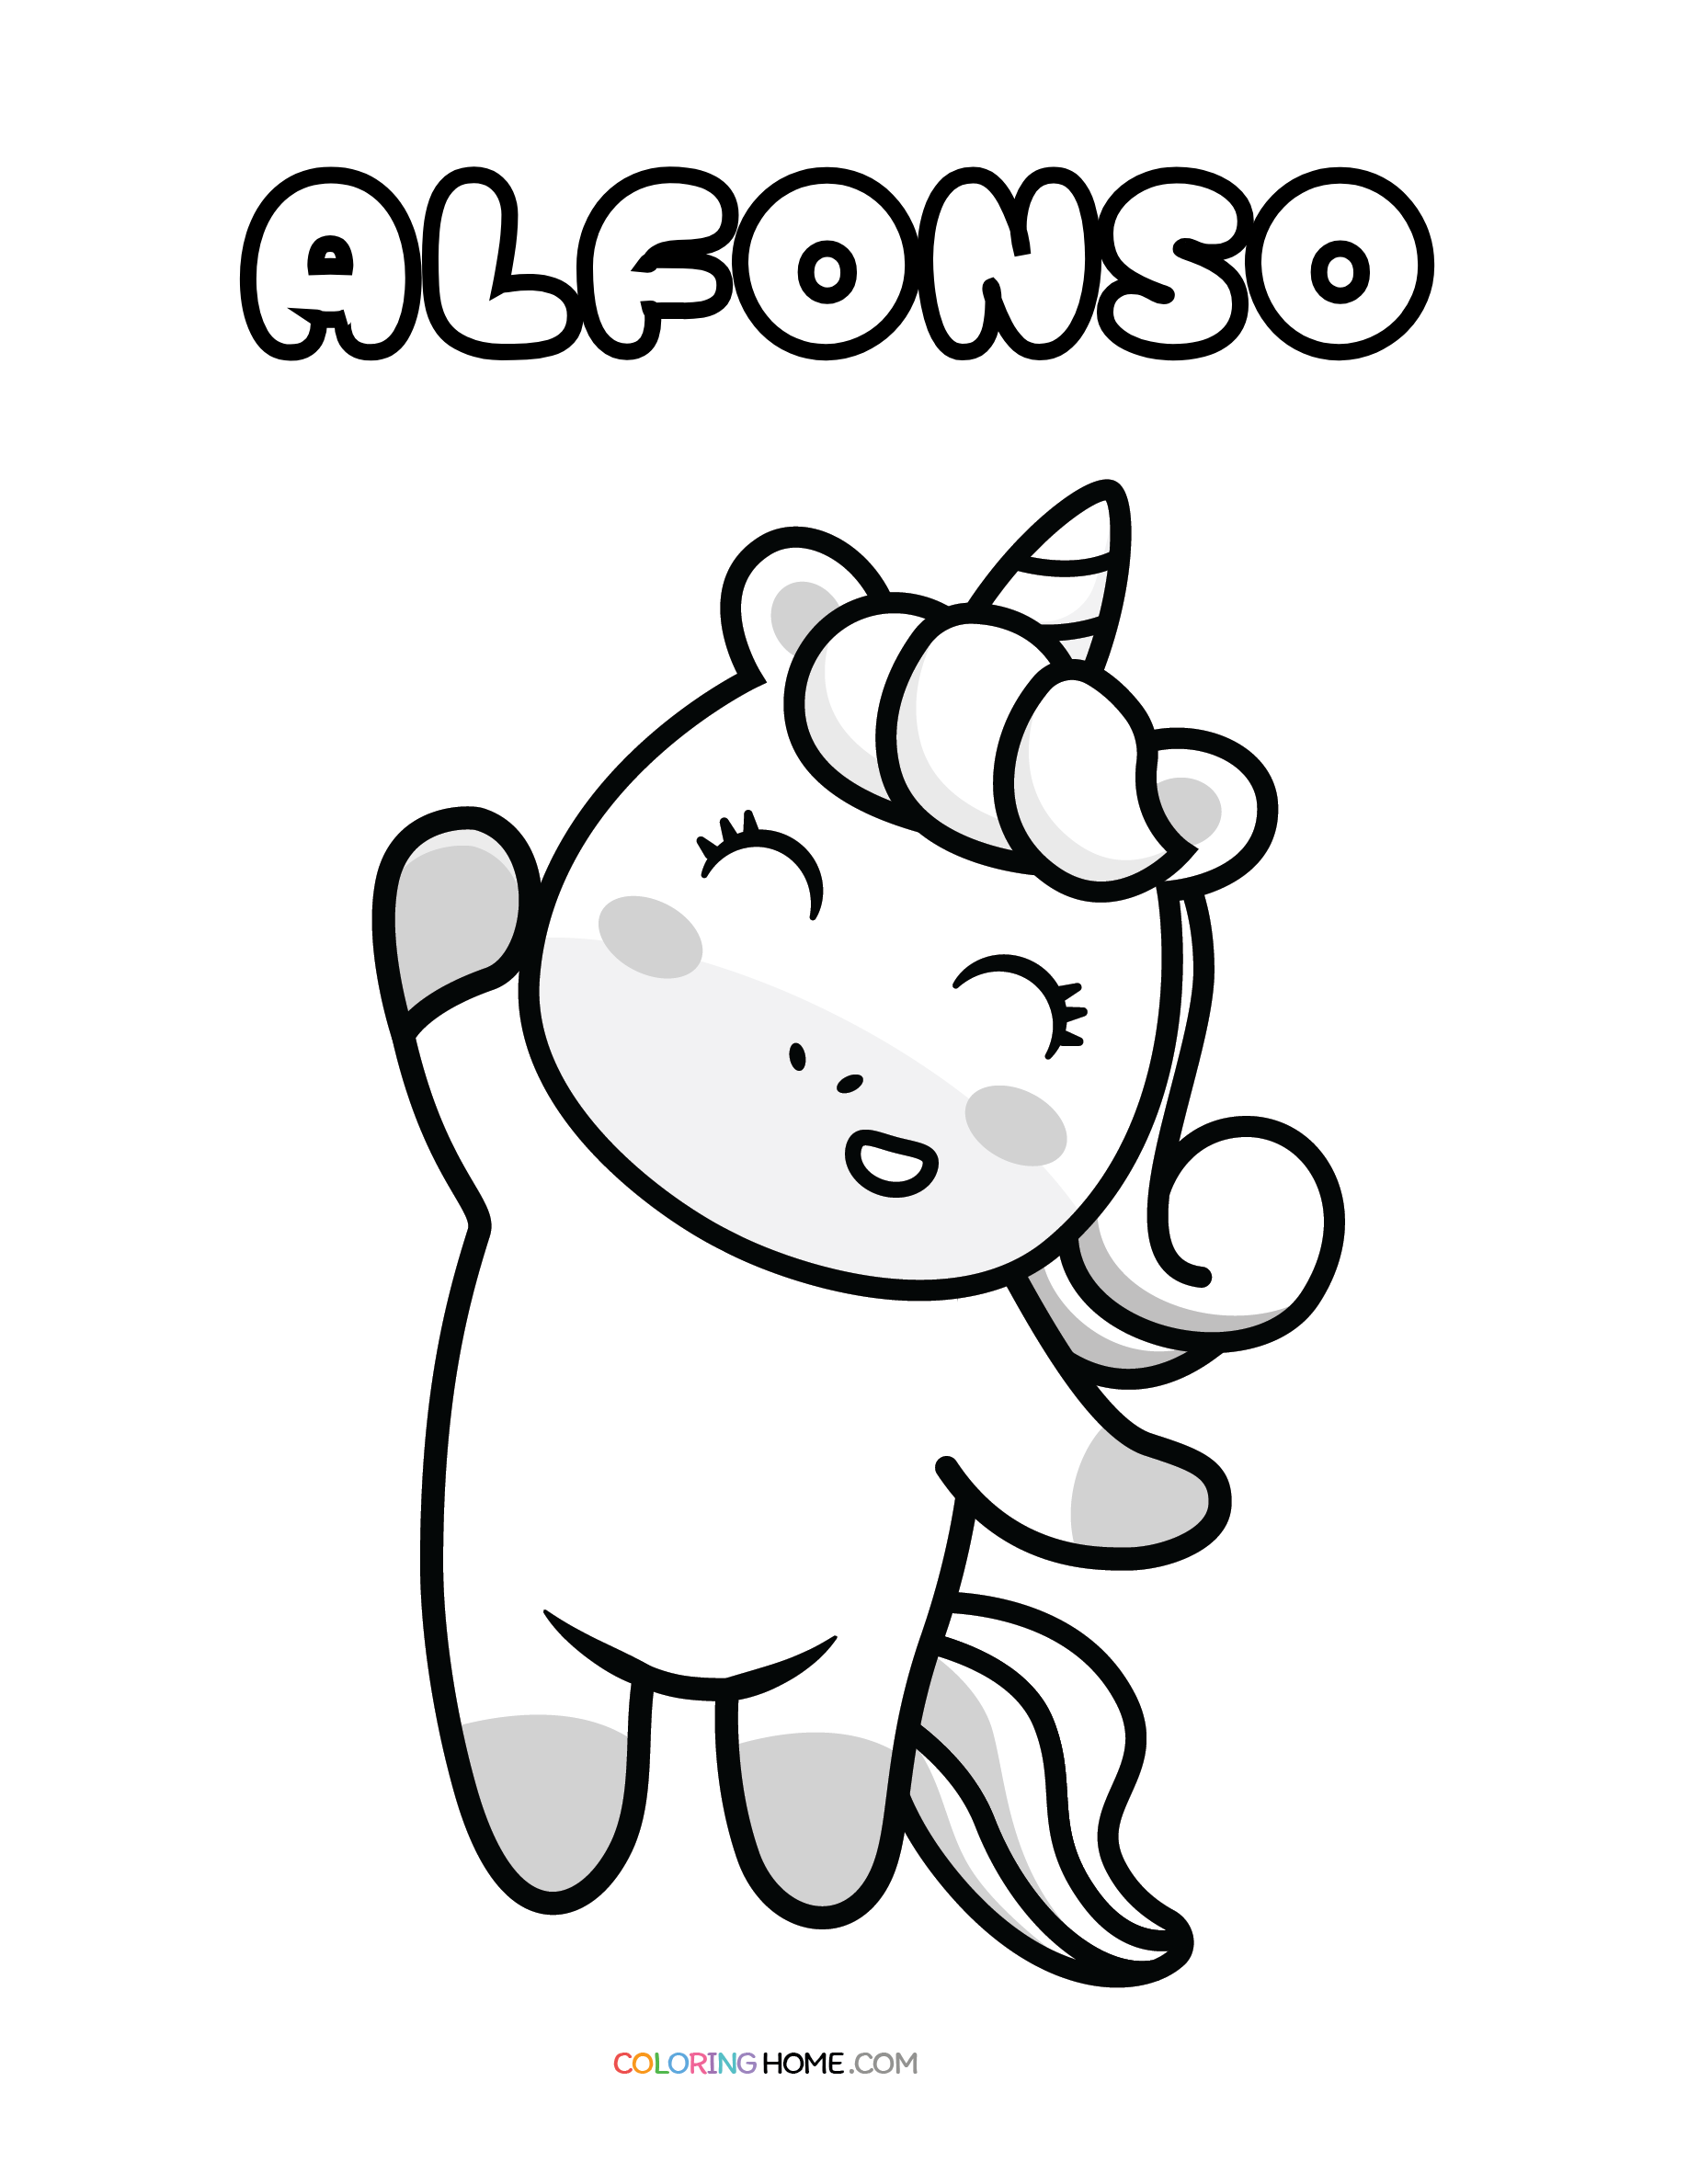 Alfonso unicorn coloring page